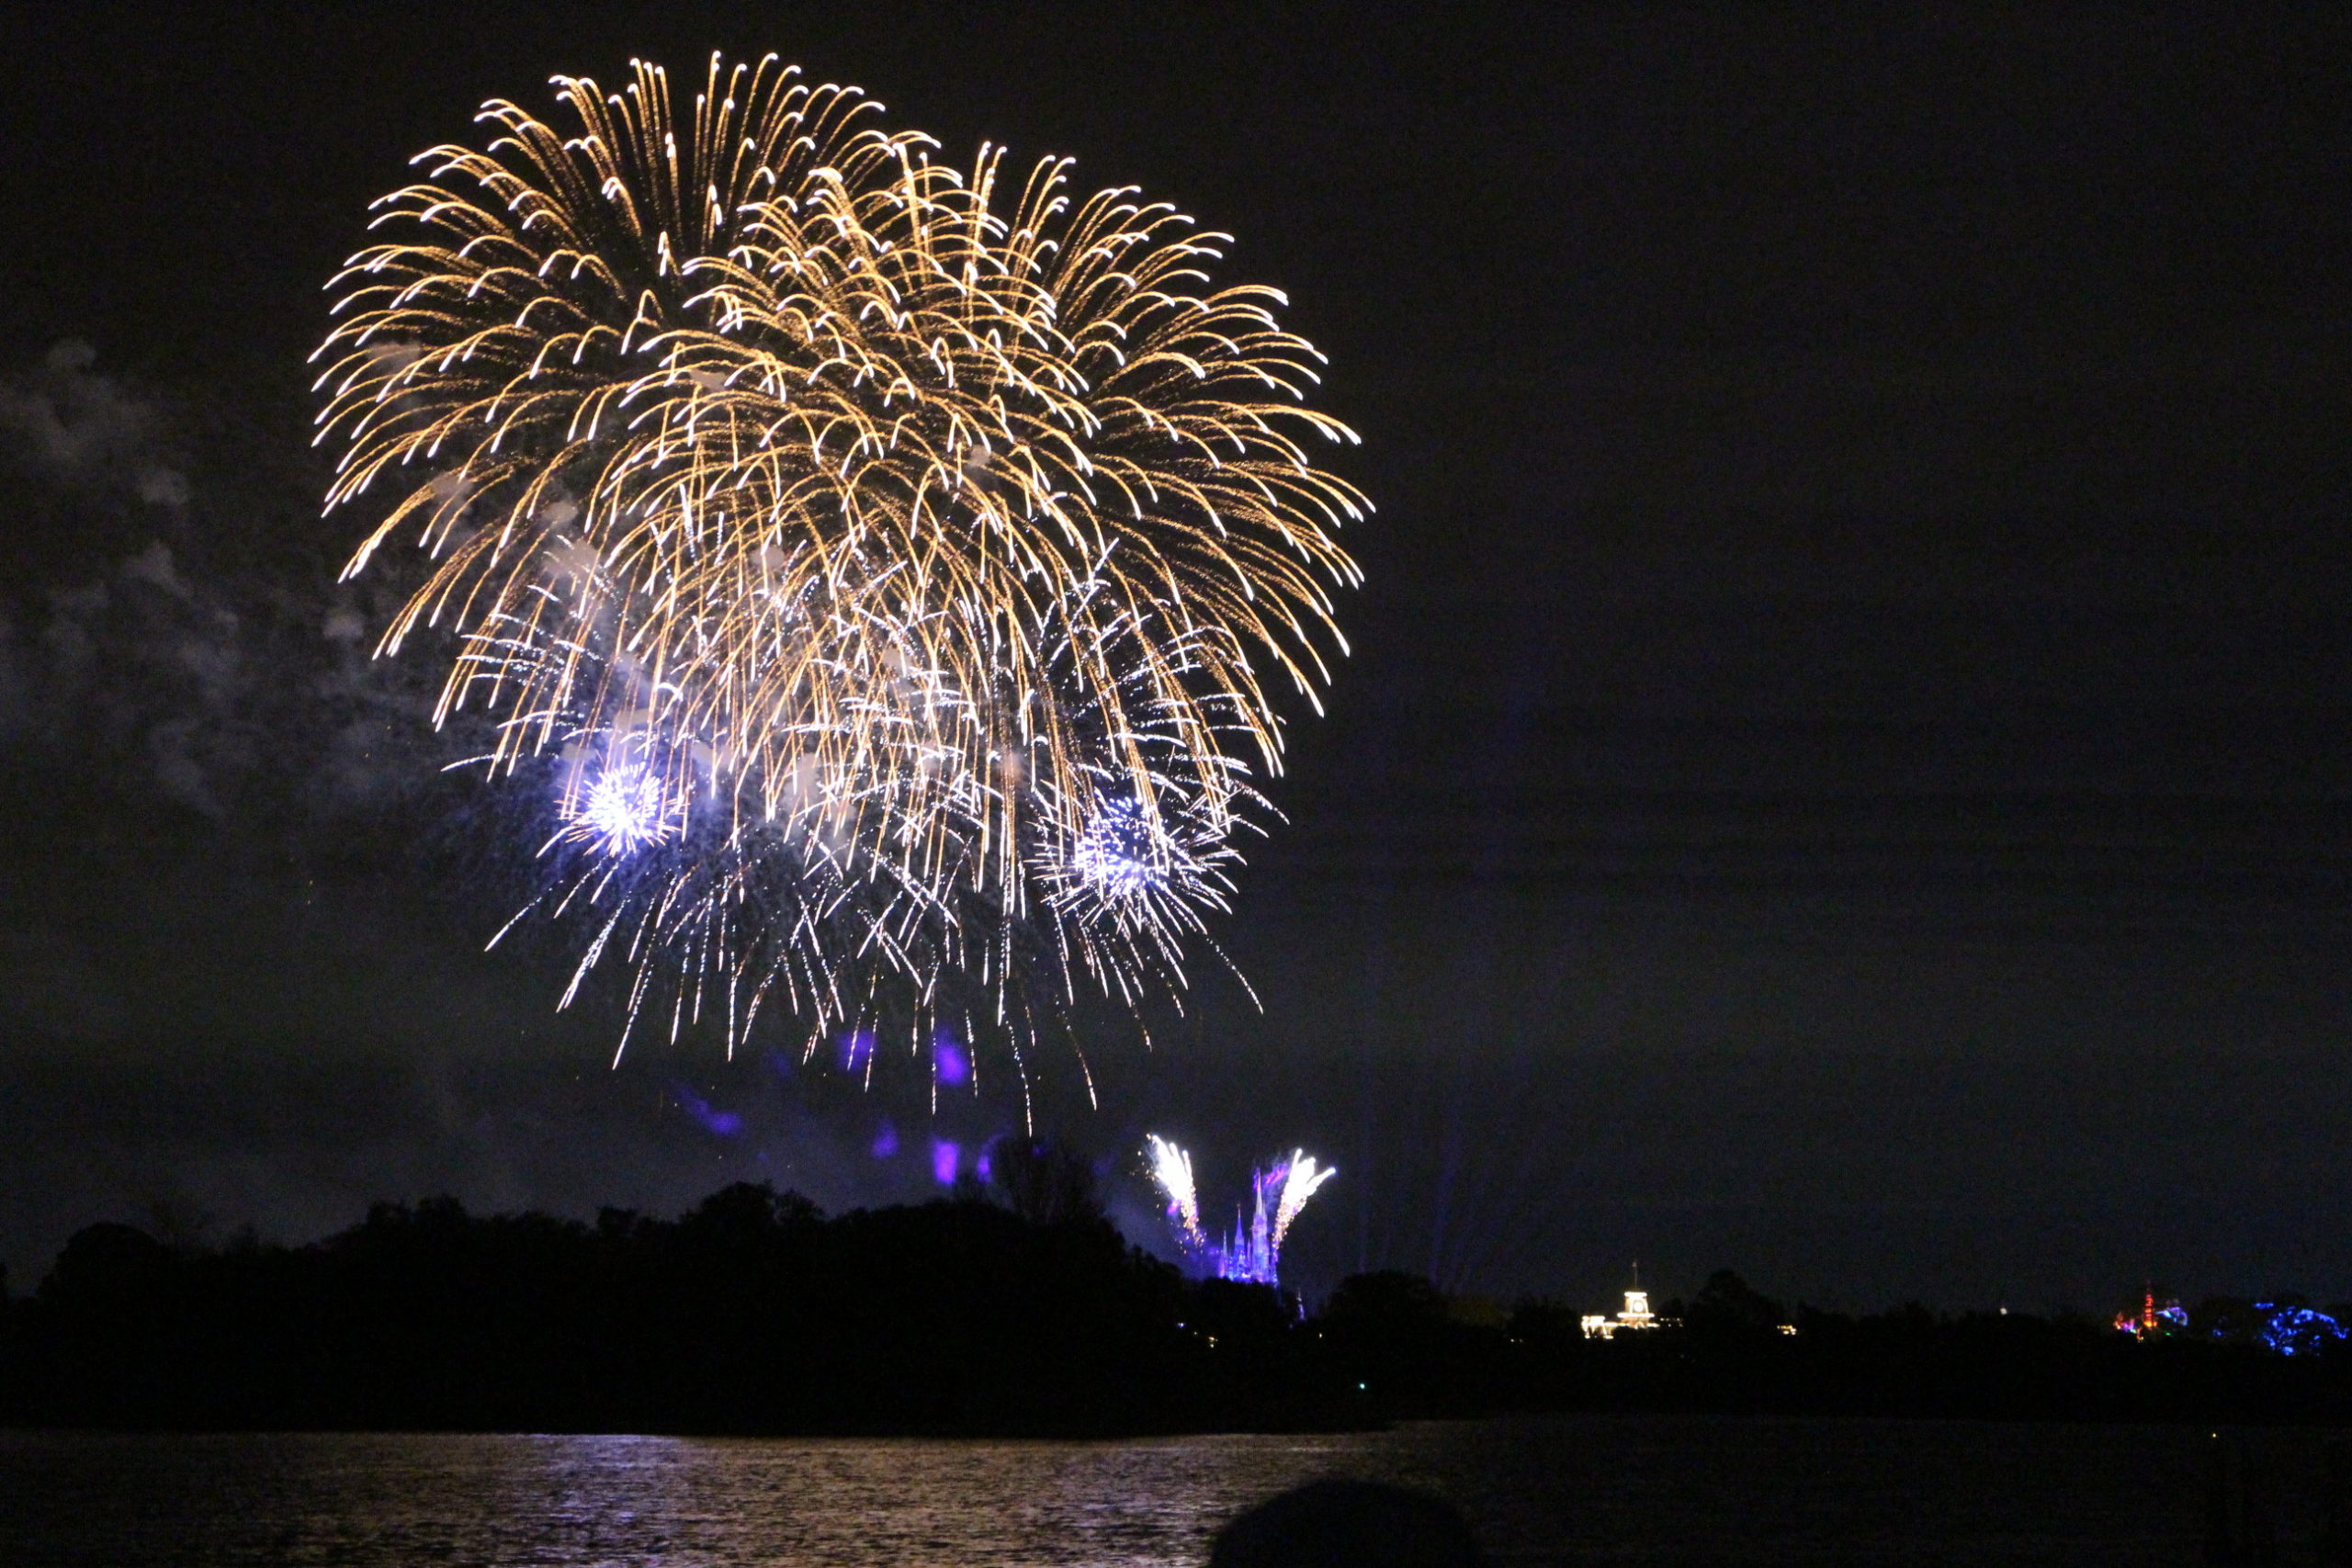 Magic Kingdom fireworks in a dark sky over water